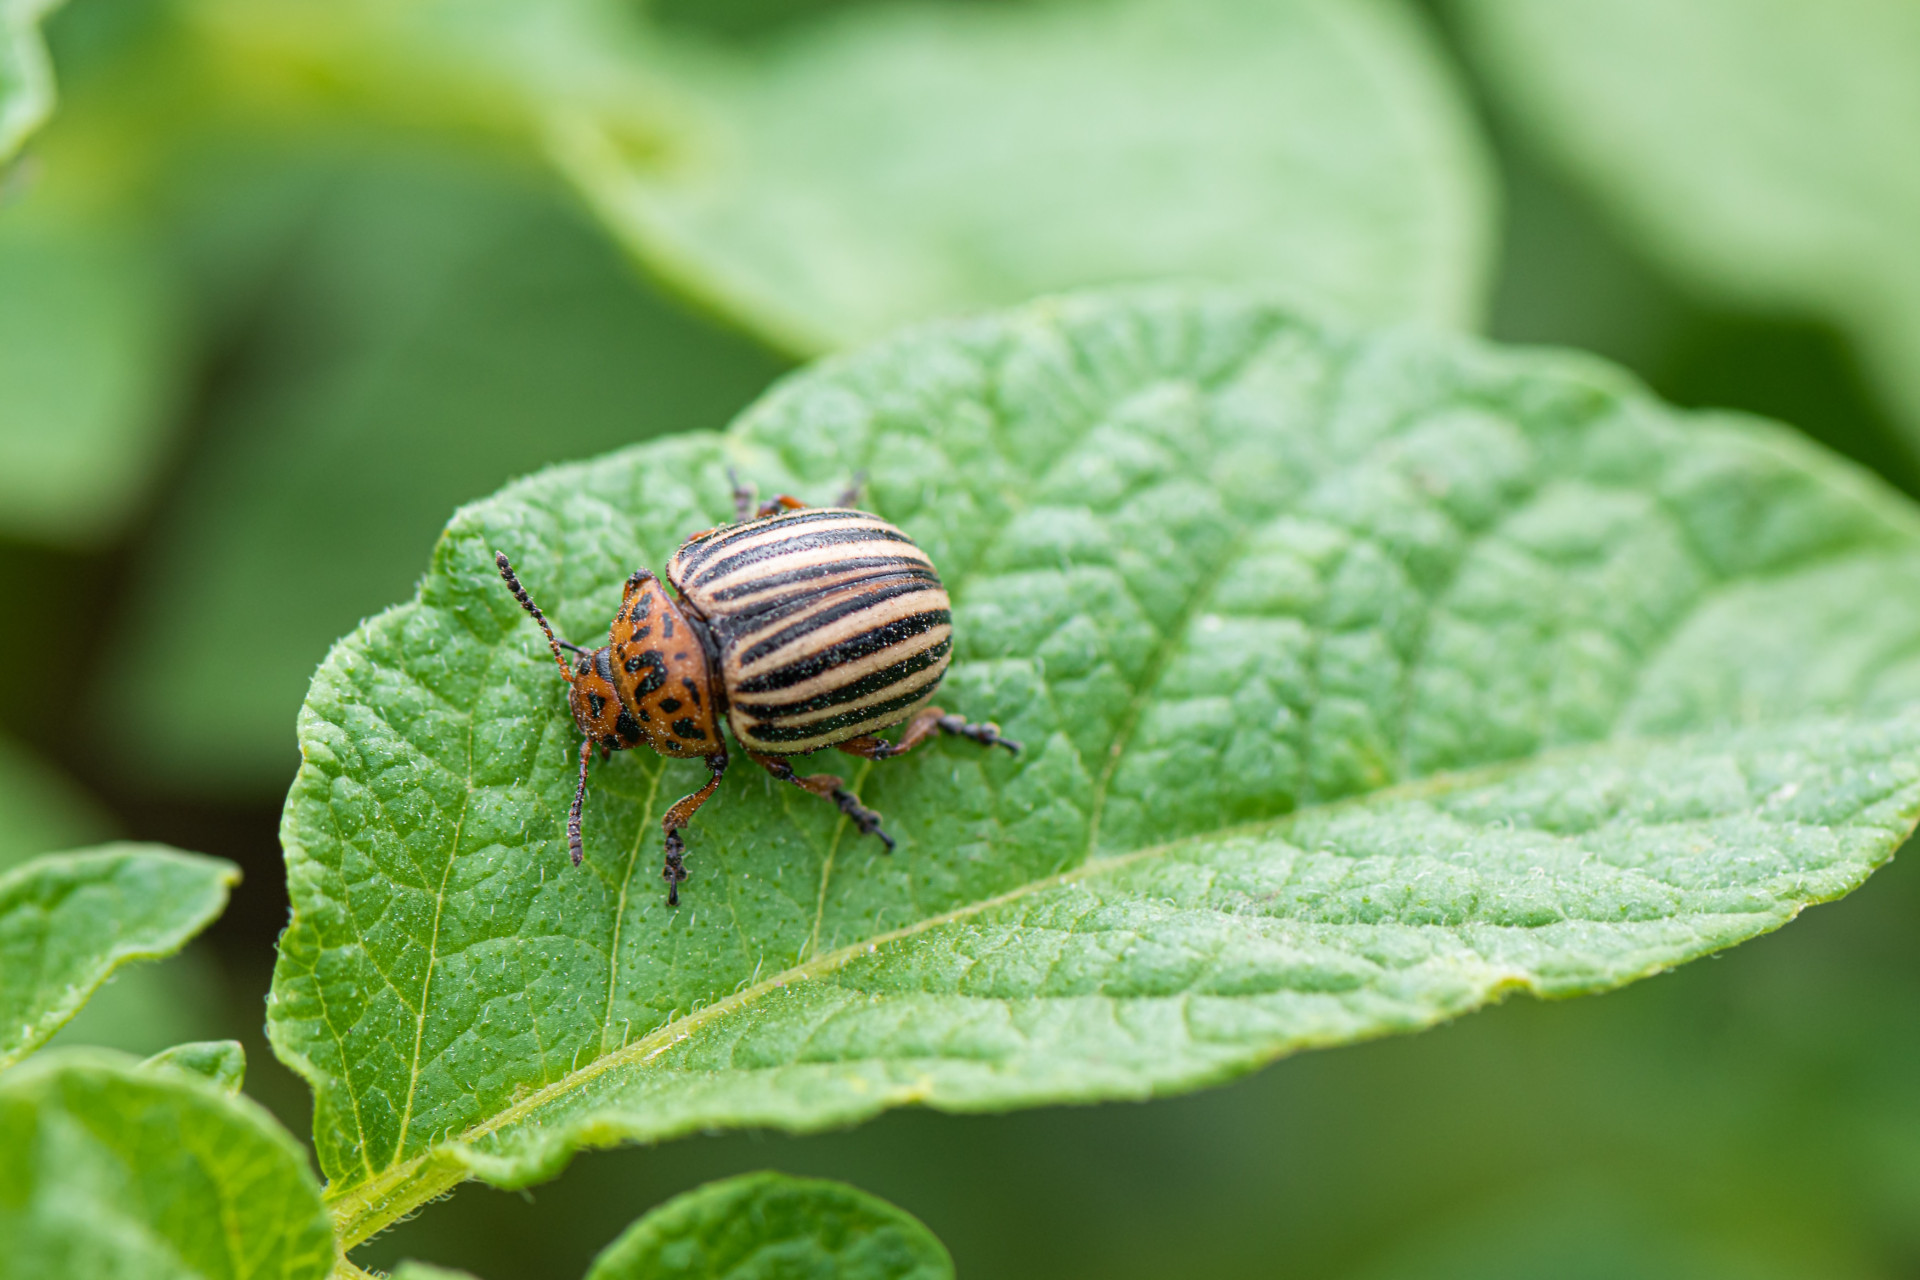 colorado-beetle-potato-bug-green-potato-plant-leaf.jpg